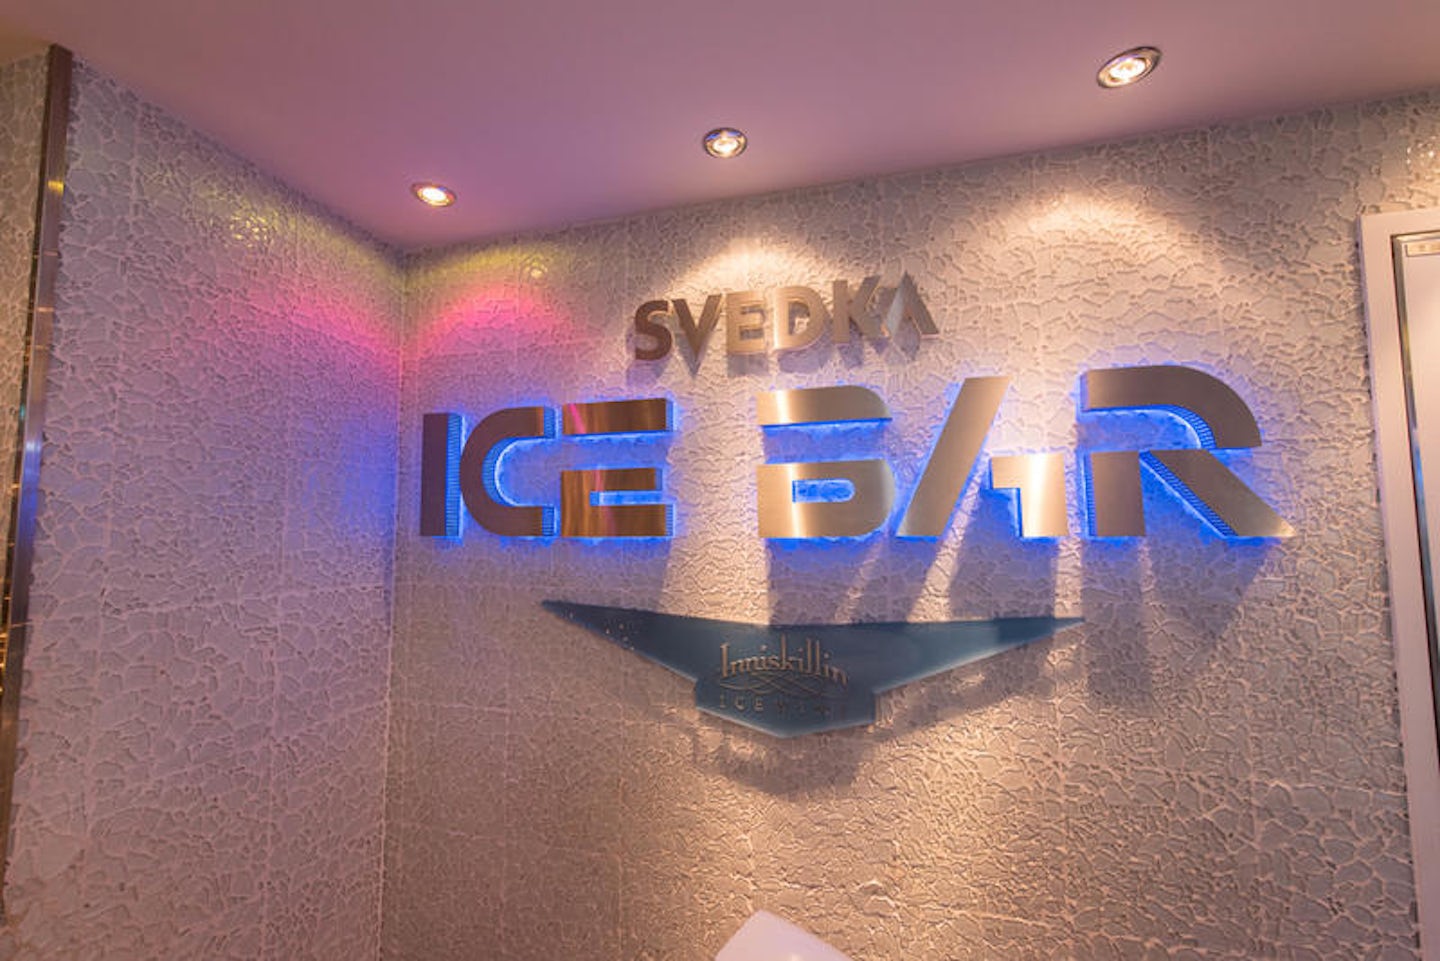 Svedka Ice Bar on Norwegian Breakaway